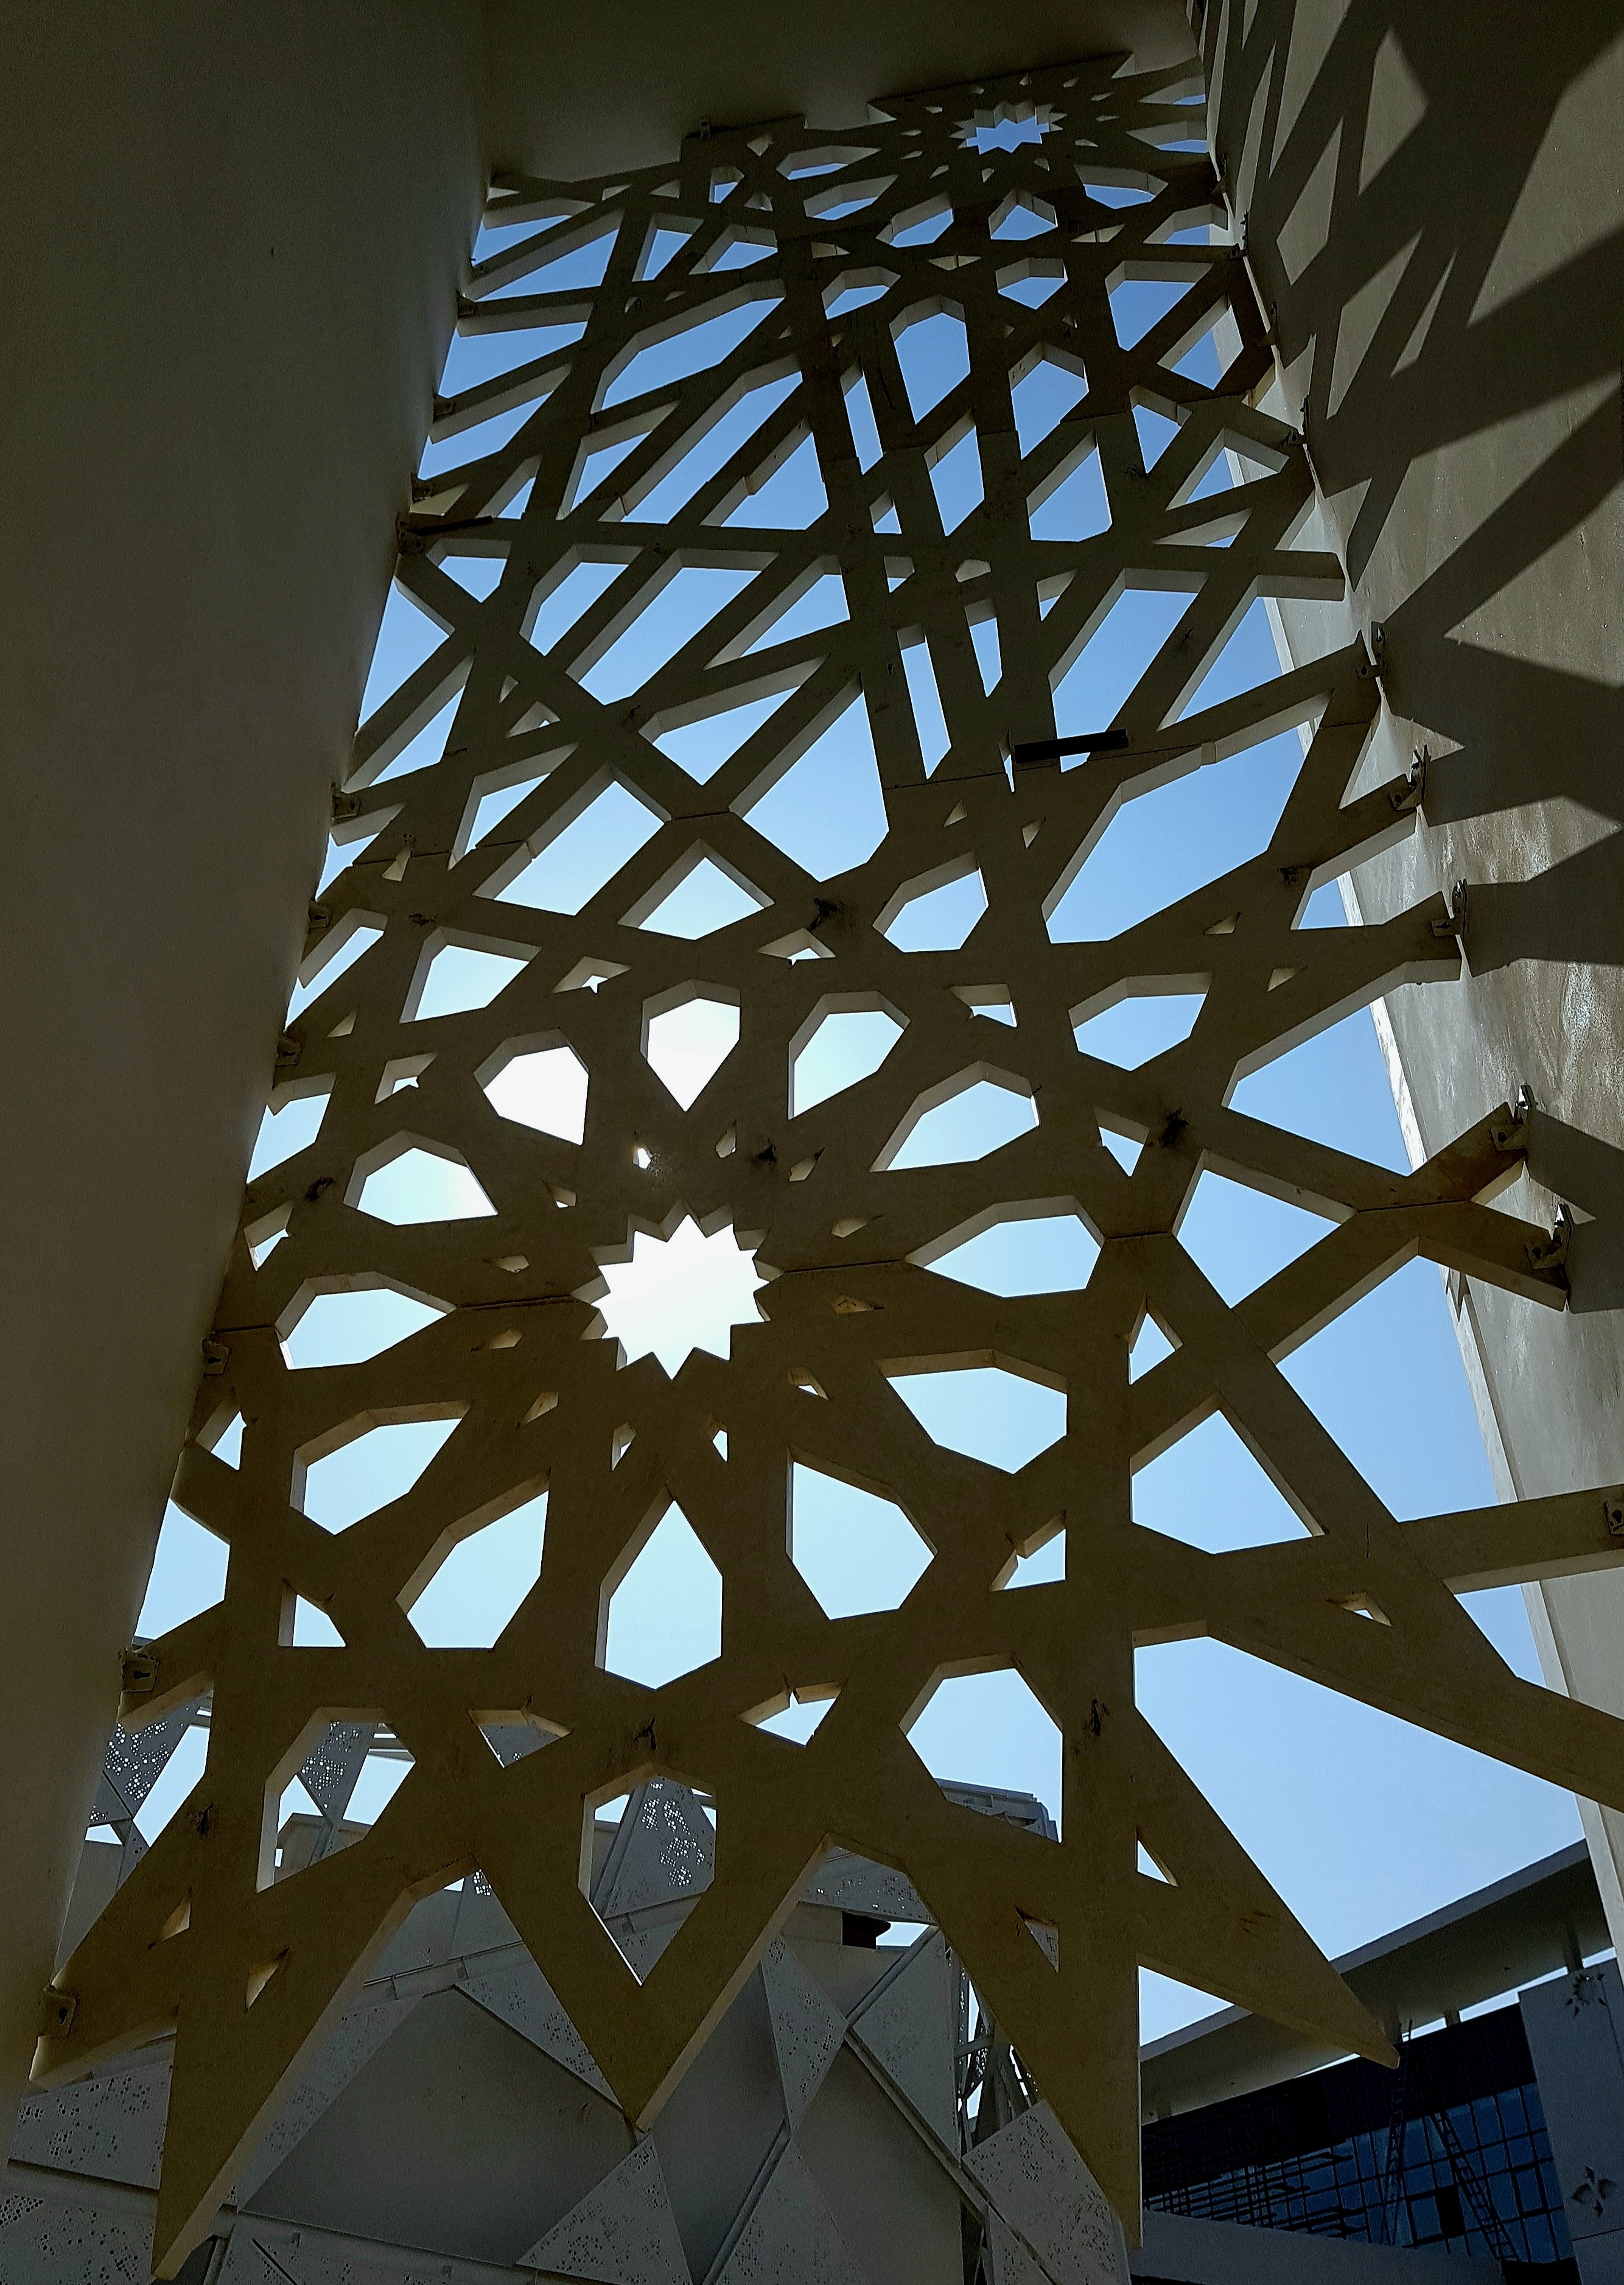 Building architecture from the Lalla Khadija multidisciplinary training center.